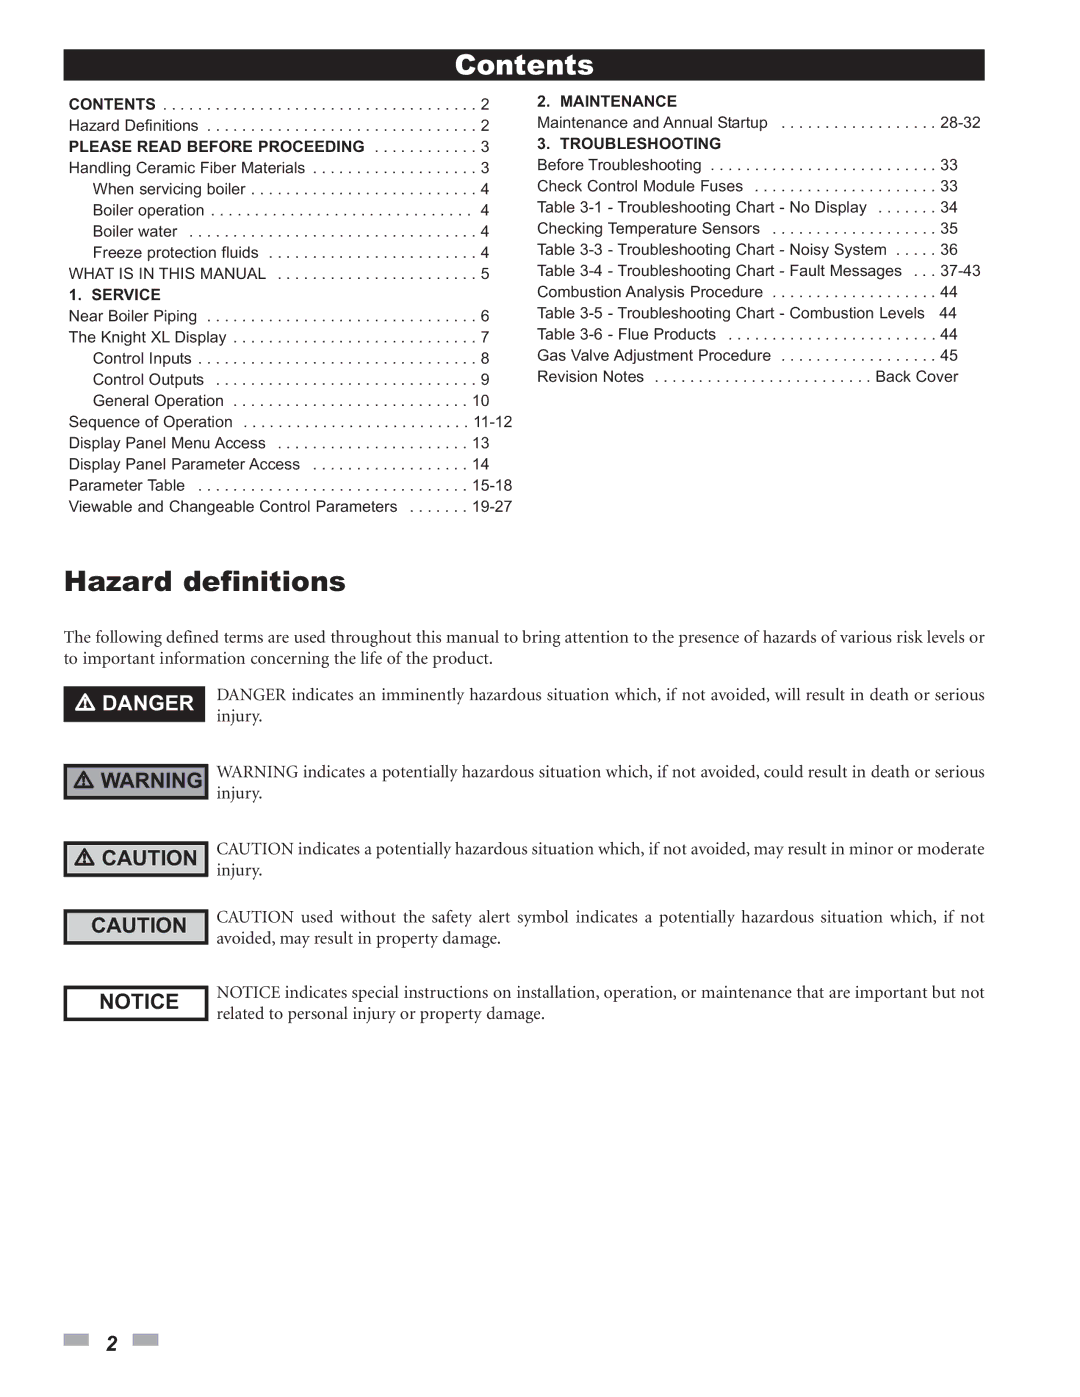 Lochinvar 400 - 801 service manual Contents 